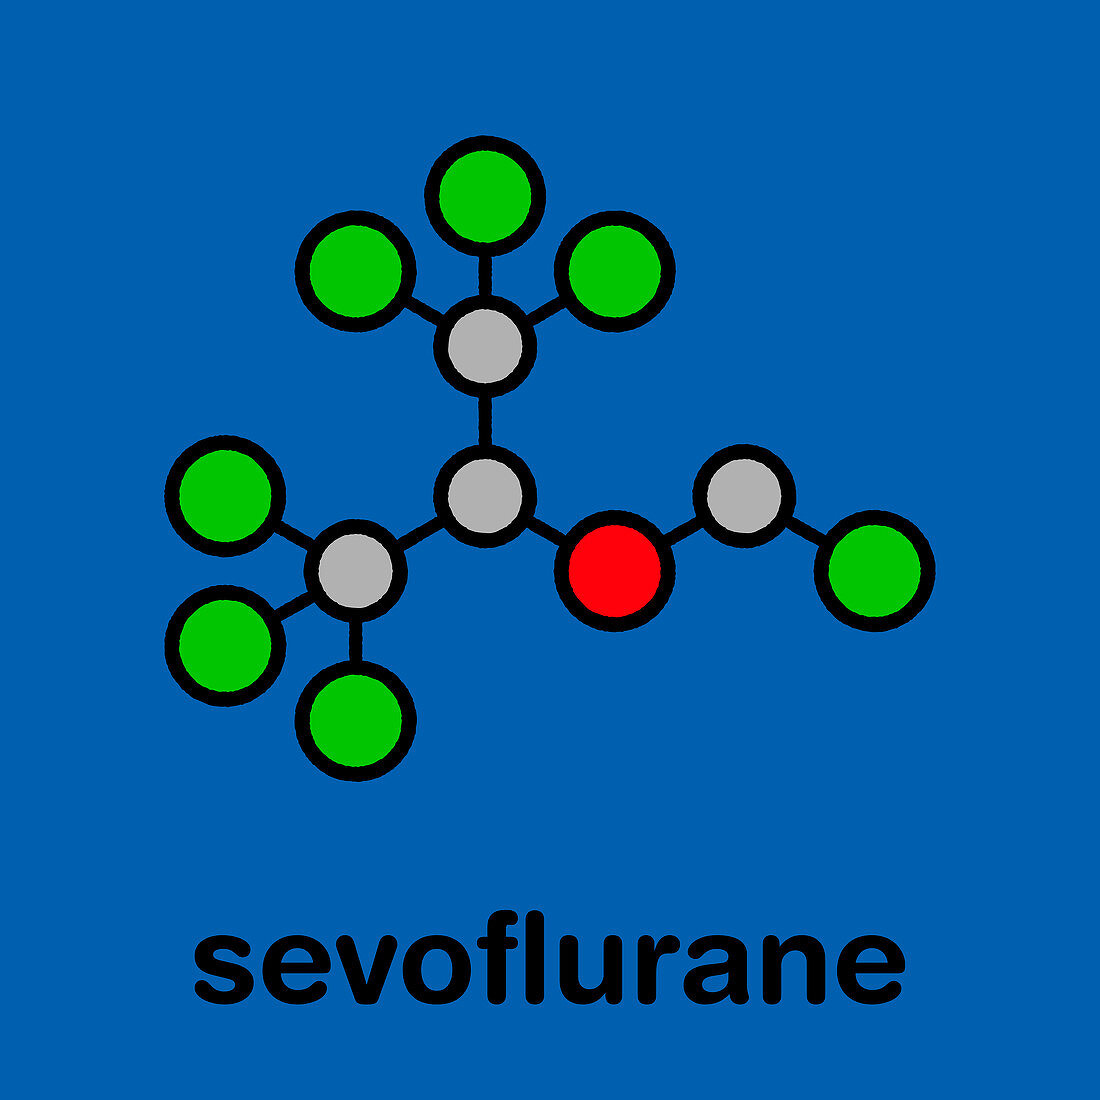 Sevoflurane inhalational anesthetic, molecular model